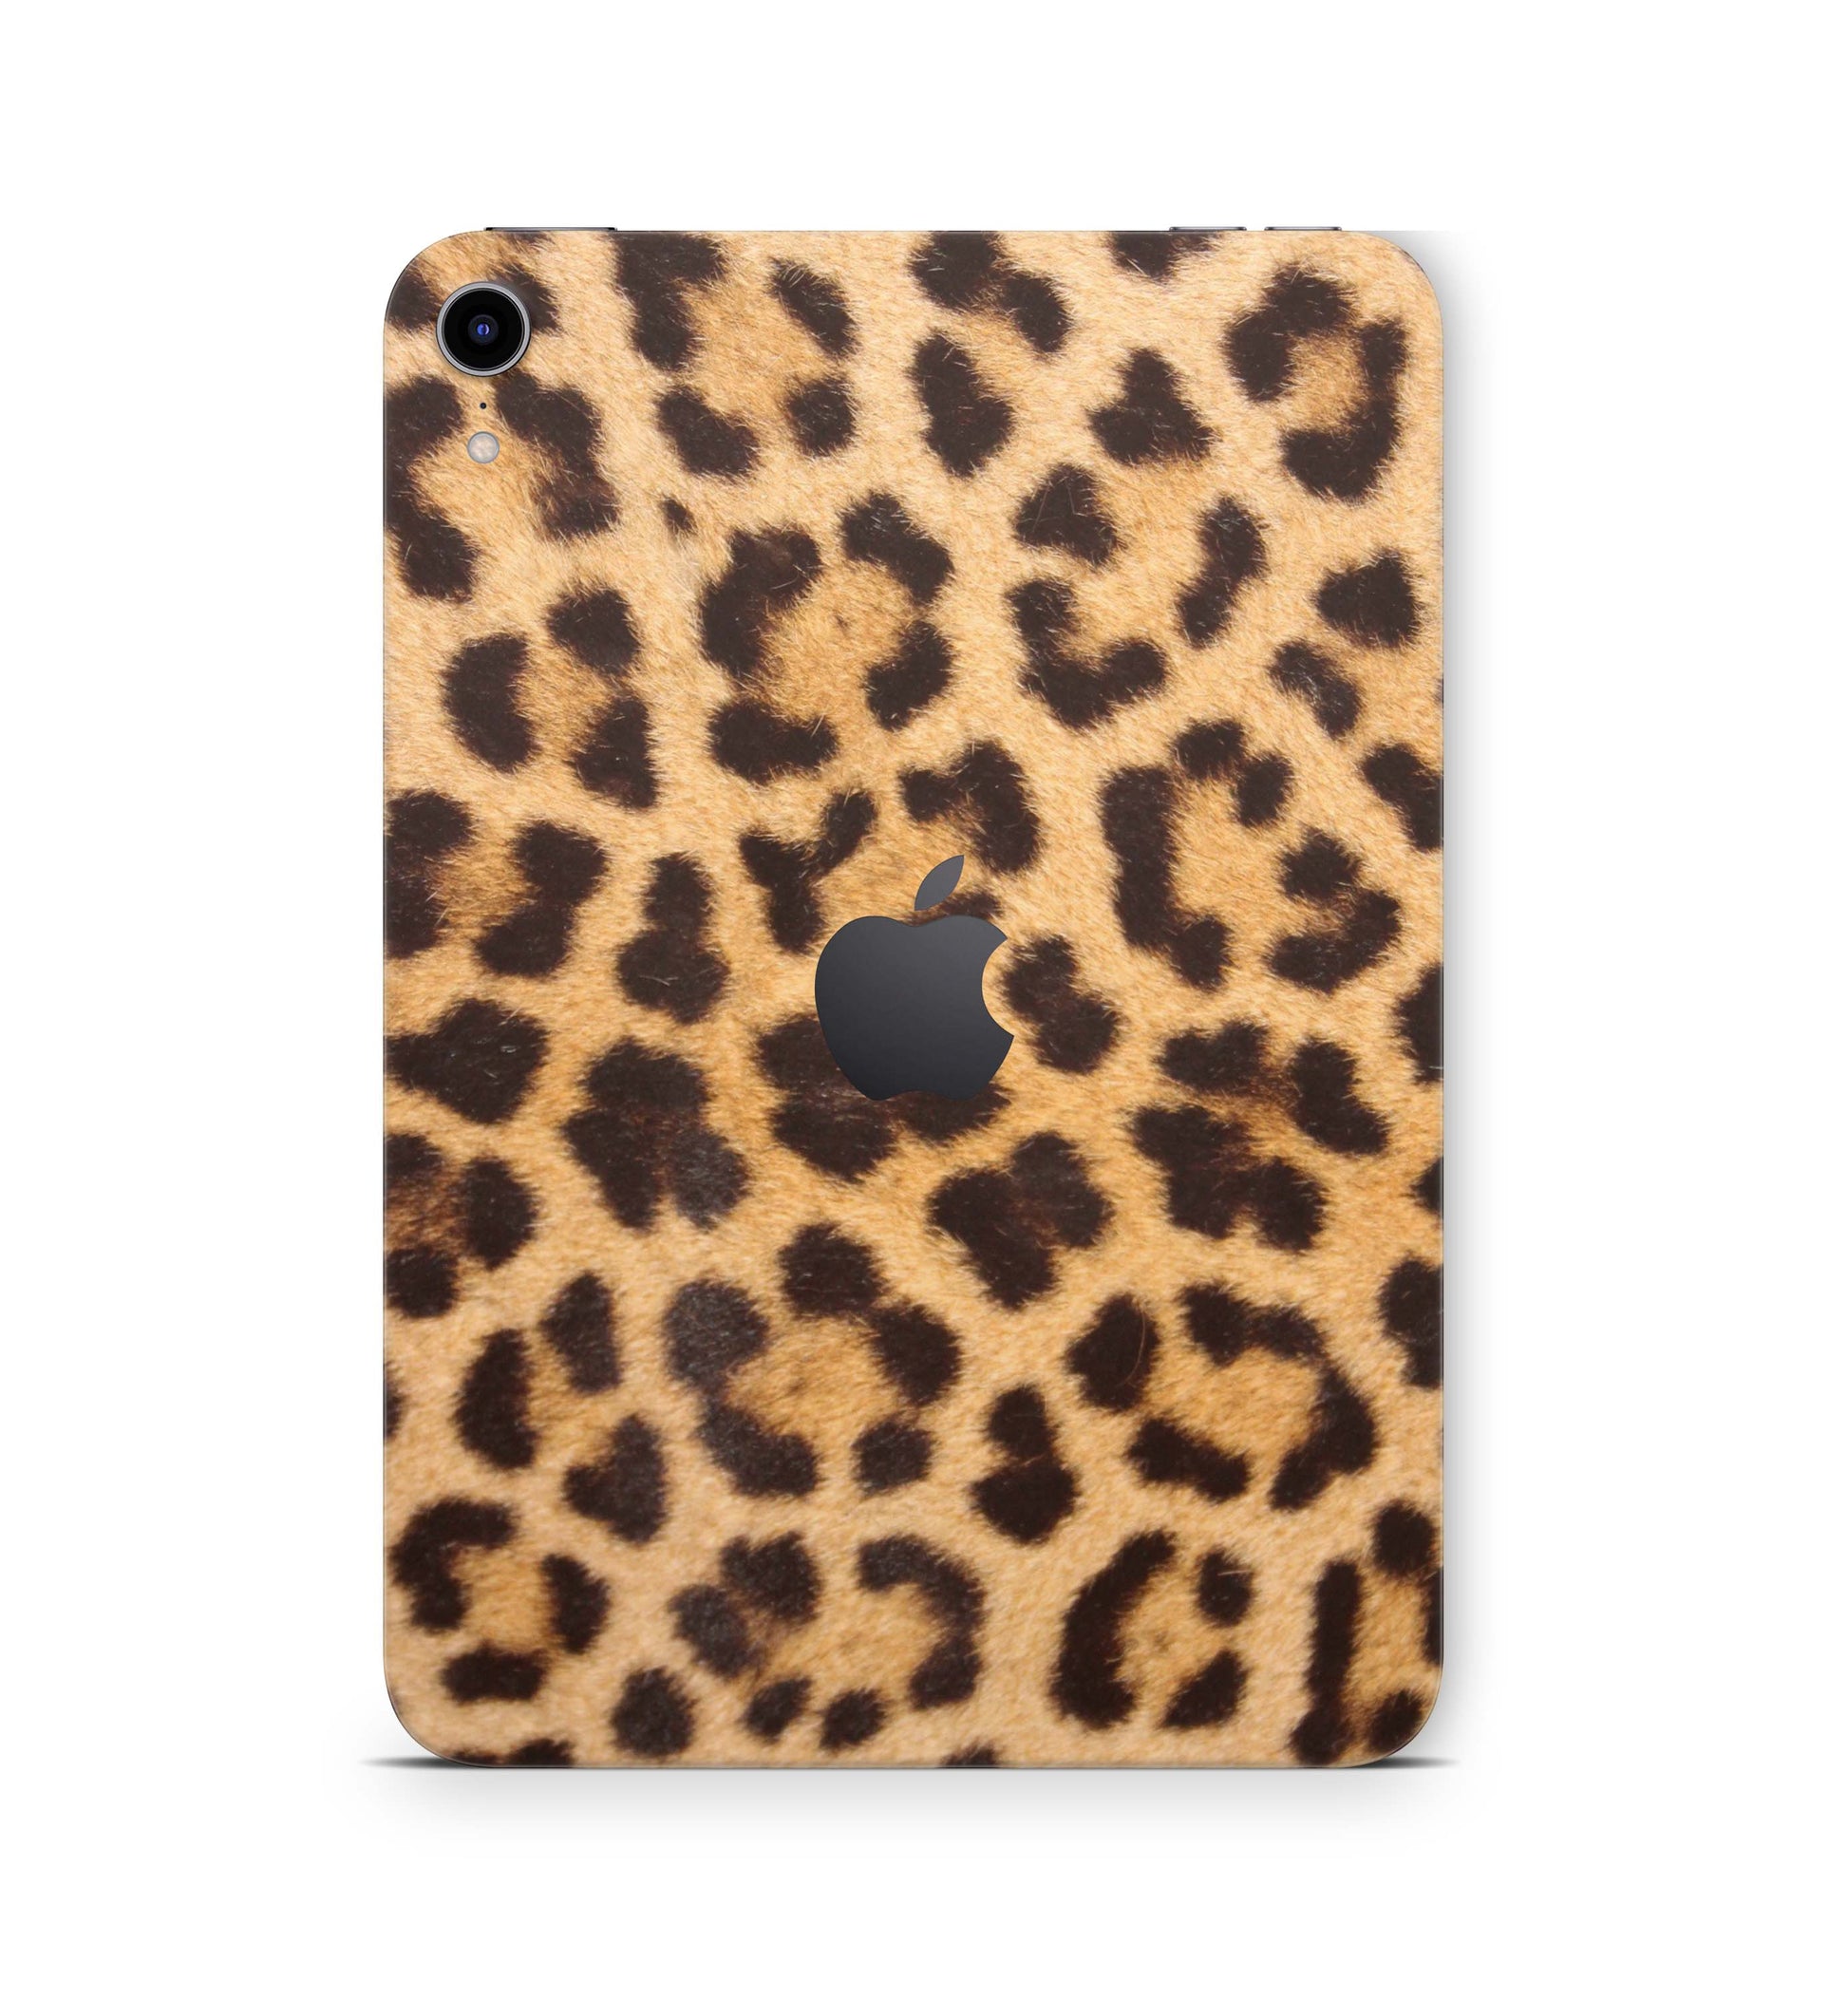 Apple iPad Skin Design Cover Folie Vinyl Skins & Wraps für alle iPad Modelle Aufkleber Skins4u Leopard-grau  